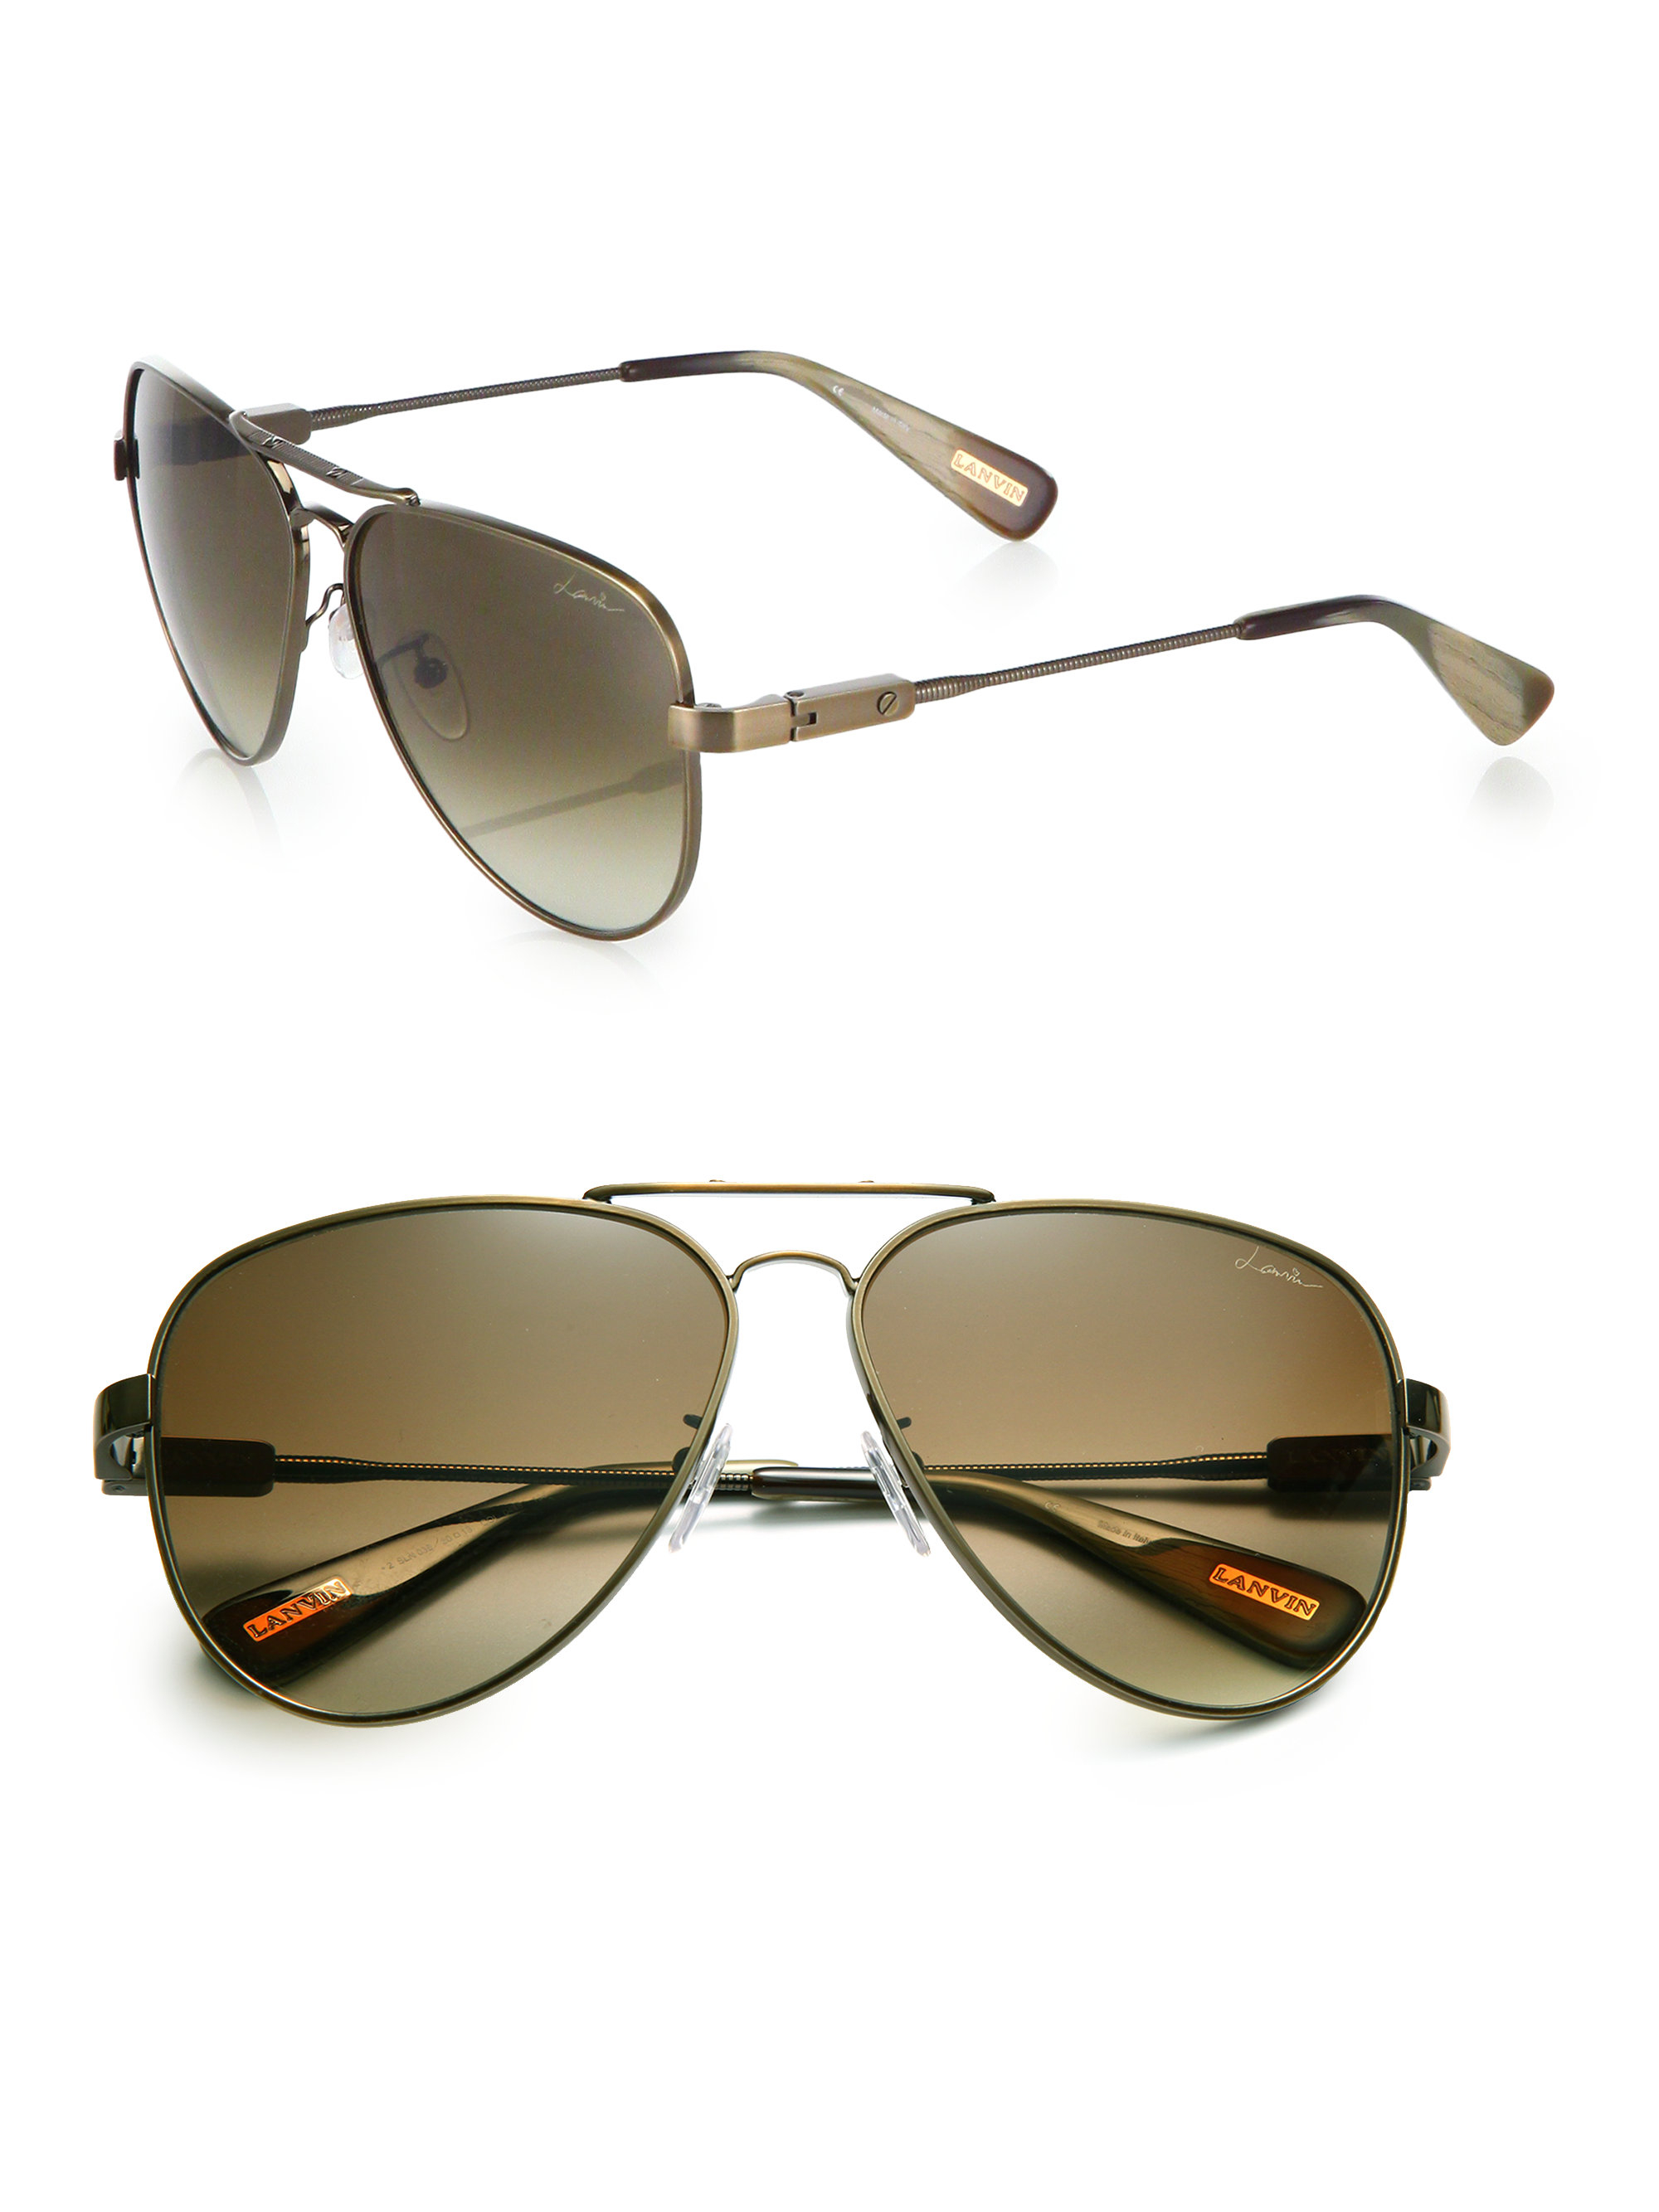 aviator shaped sunglasses